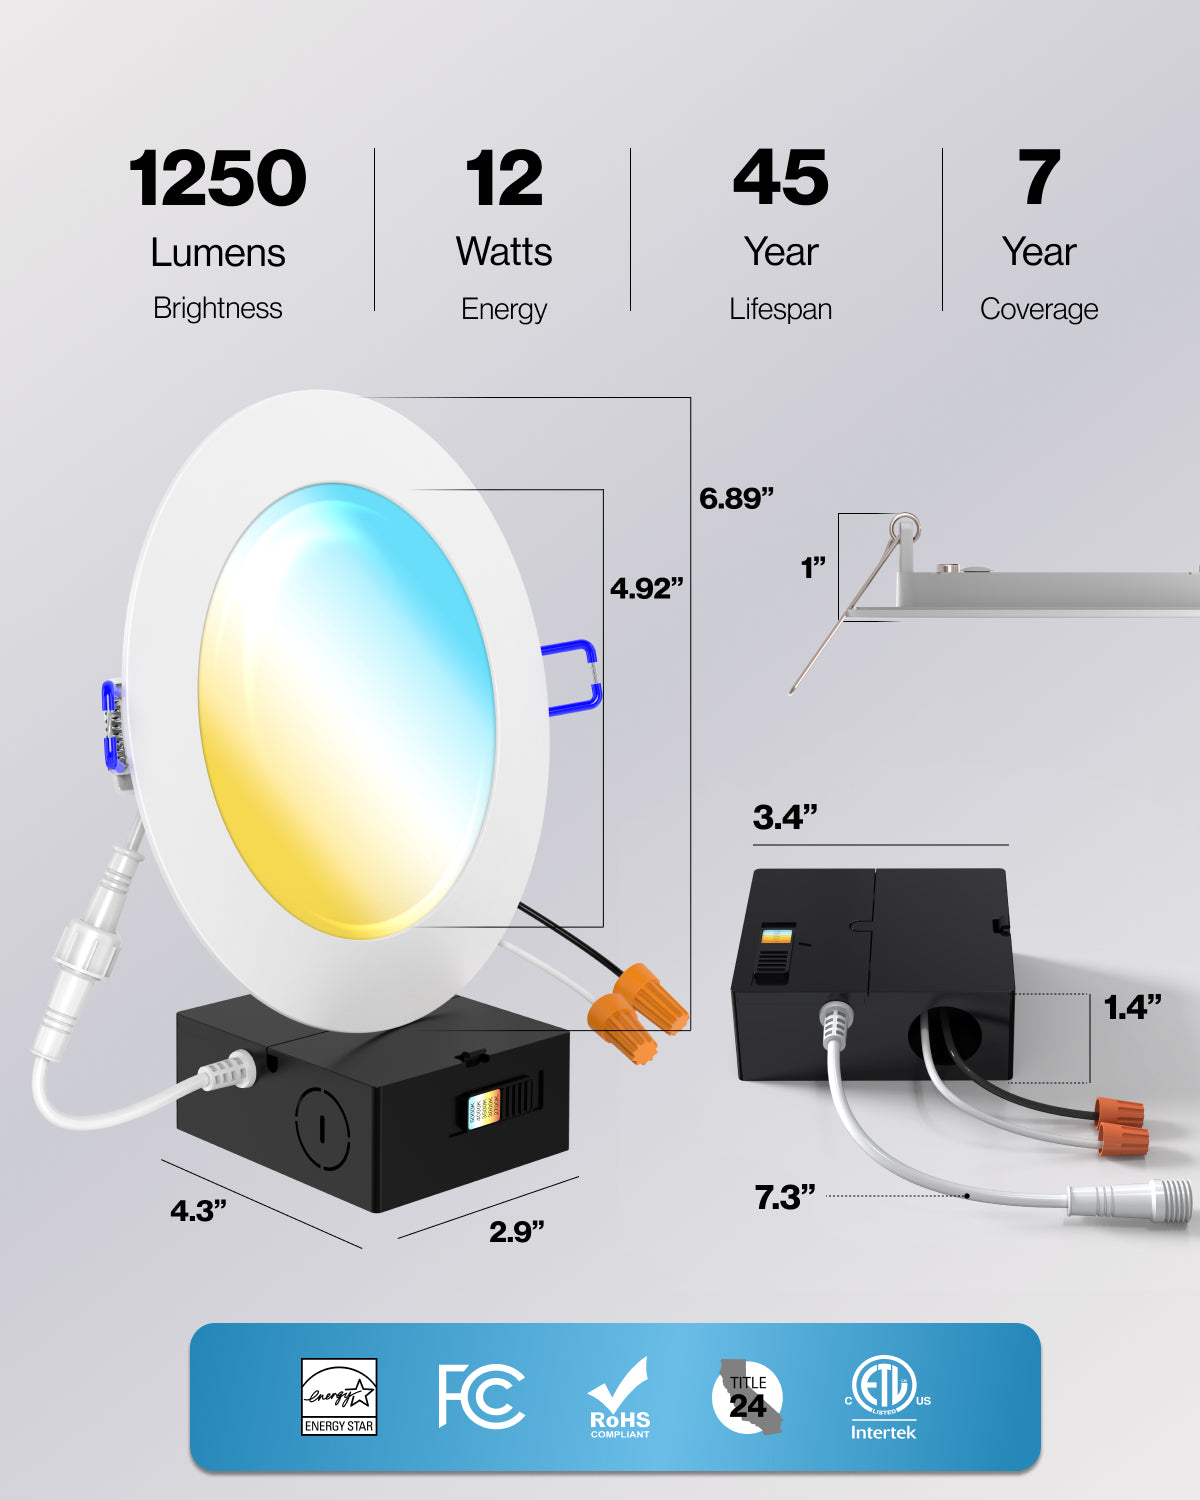 1250 lumens (brightness), 12 watts (energy), 45 year lifespan, 7-year warranty coverage.